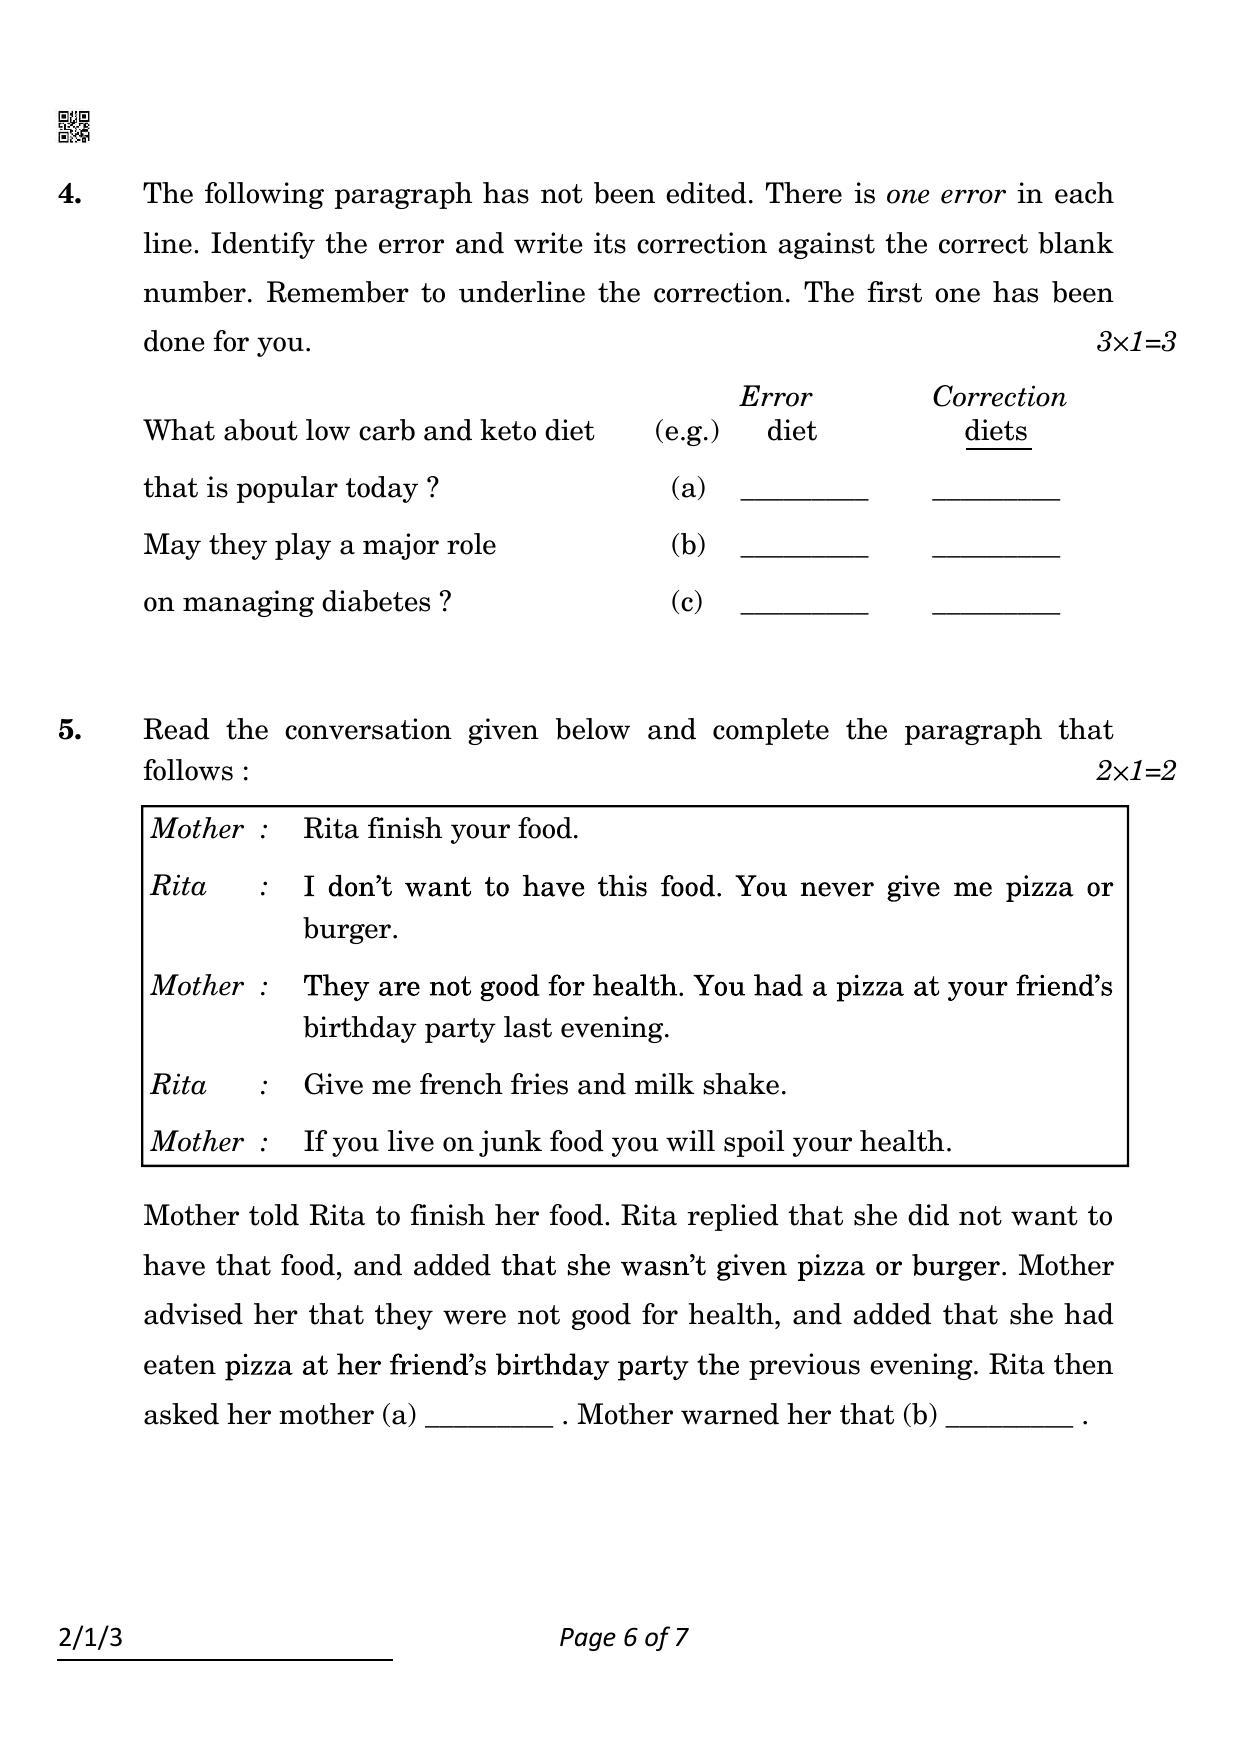 CBSE Class 10 2-1-3 English L & L 2022 Question Paper - Page 6